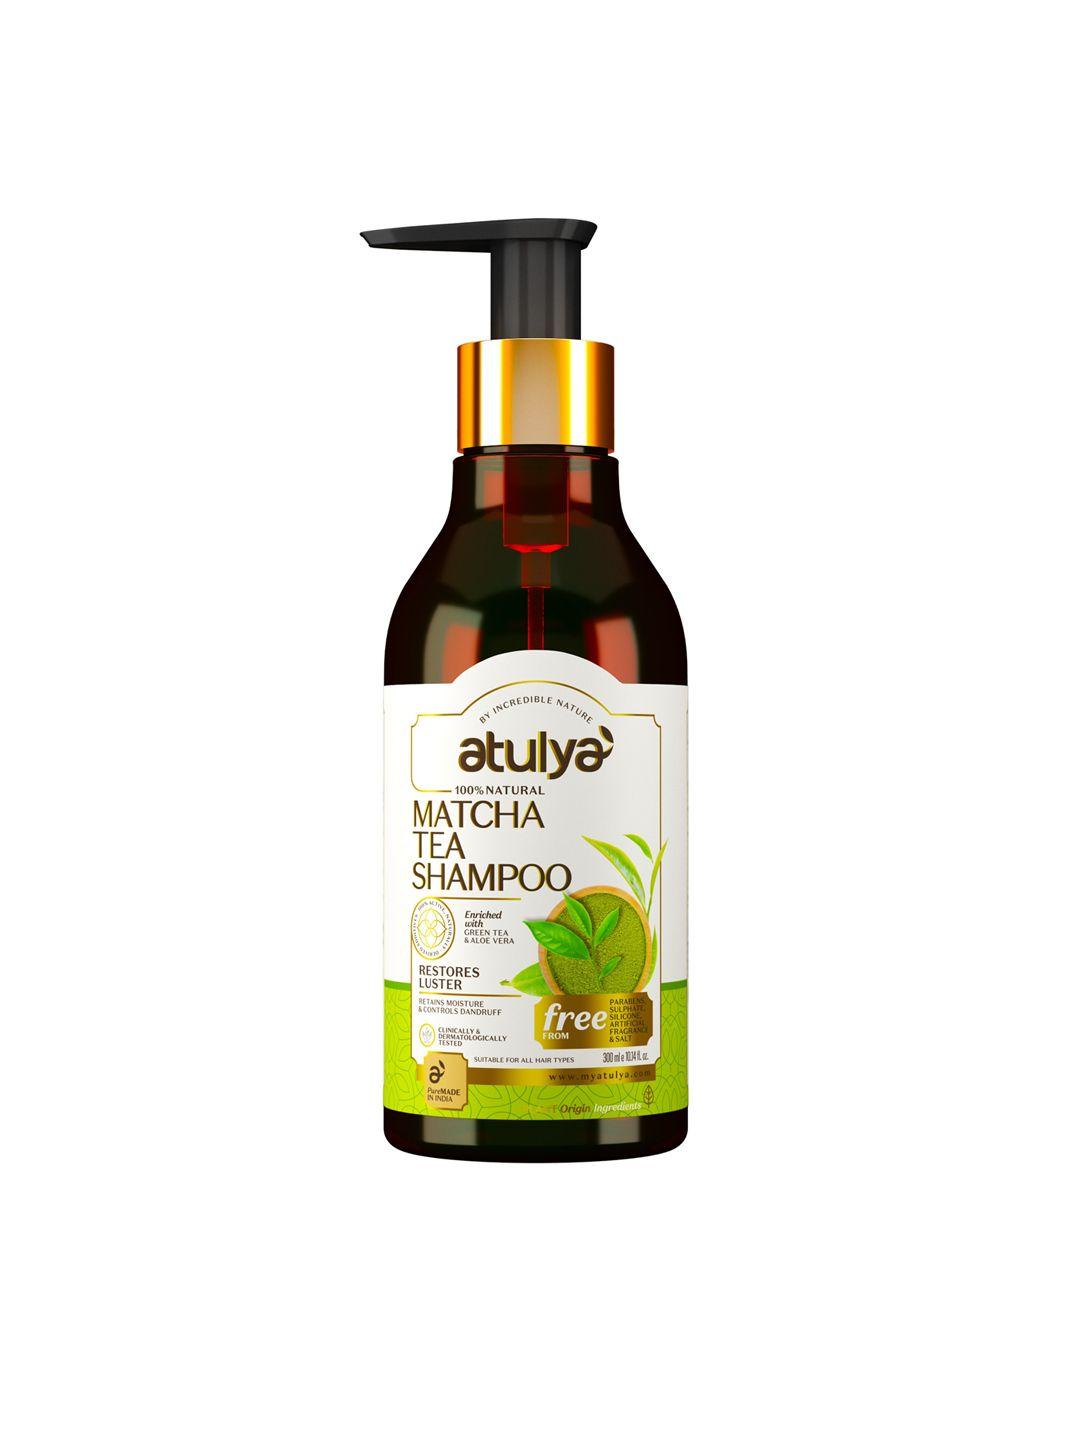 atulya matcha tea shampoo - 300 ml